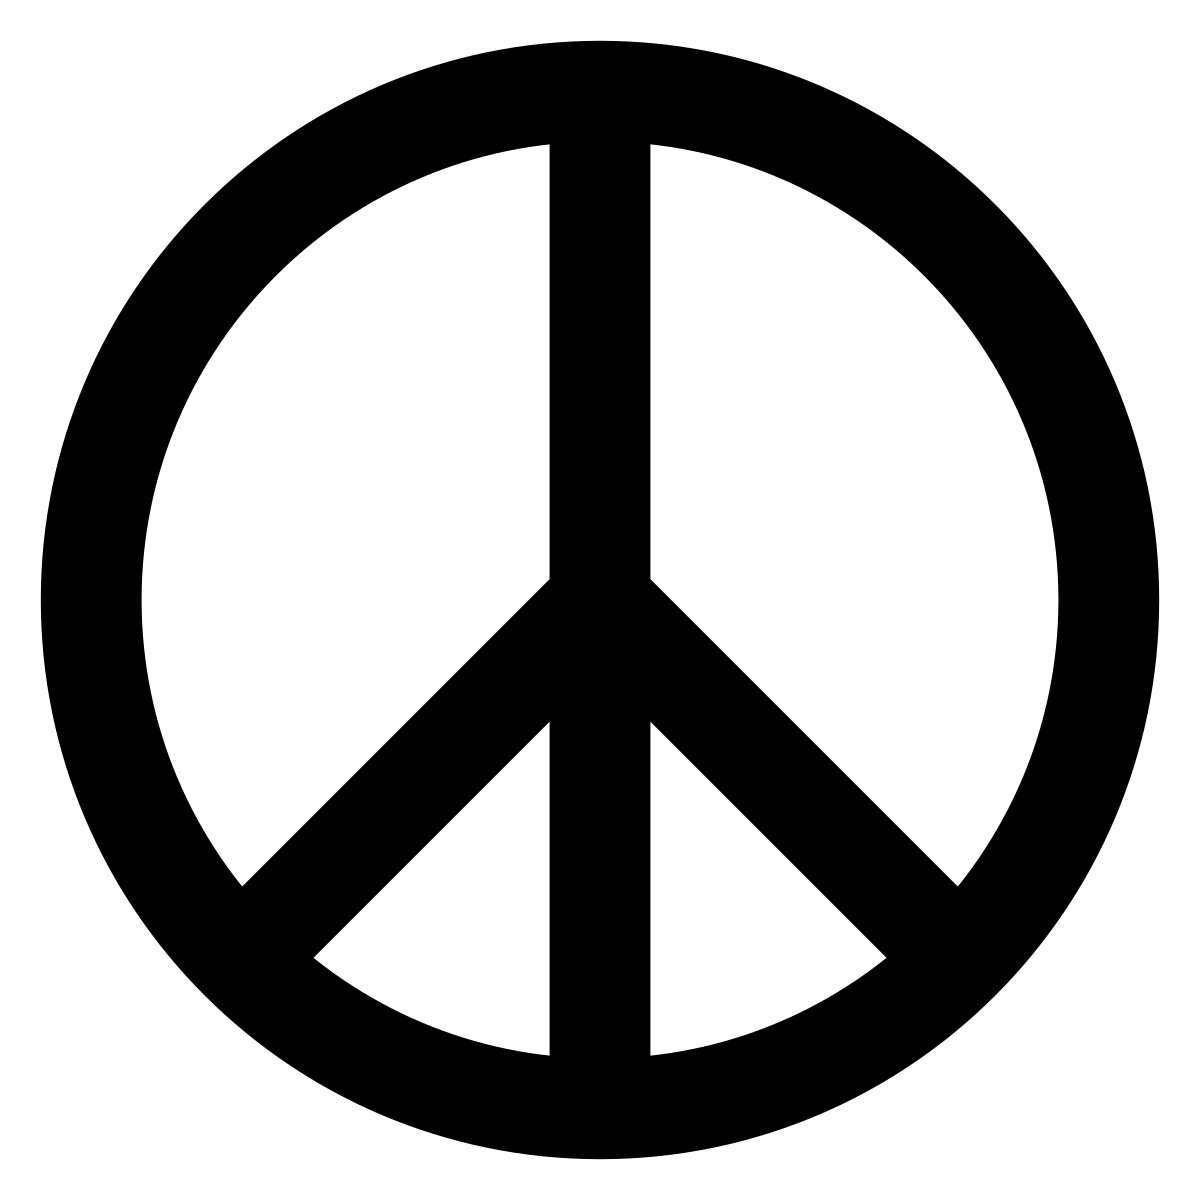 Hippie Peace Sign Logo - Peace symbols